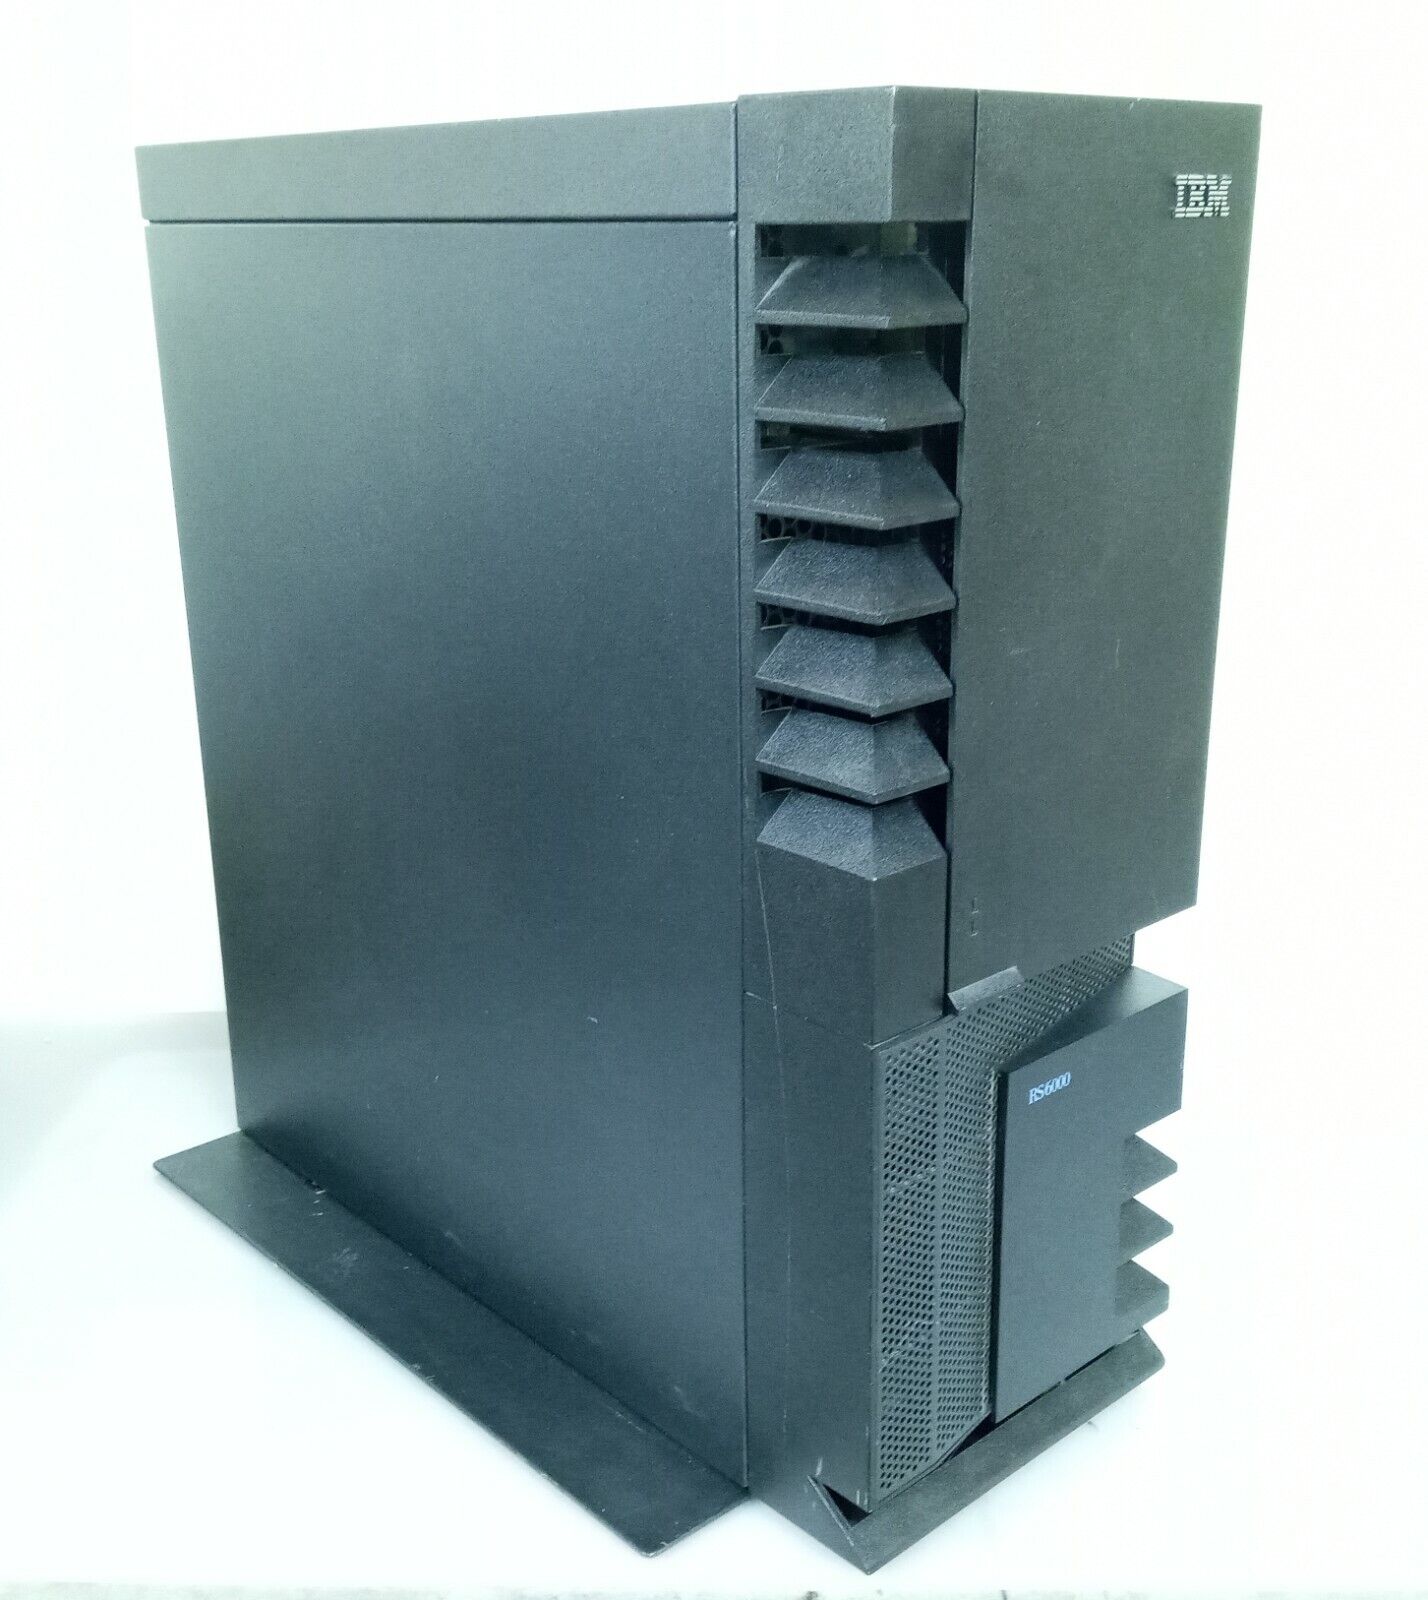 IBM RS/6000 44P Model 270 Server 375 MHz.256MB 18GB 1.44 Floppy DDS3 Tape Drive